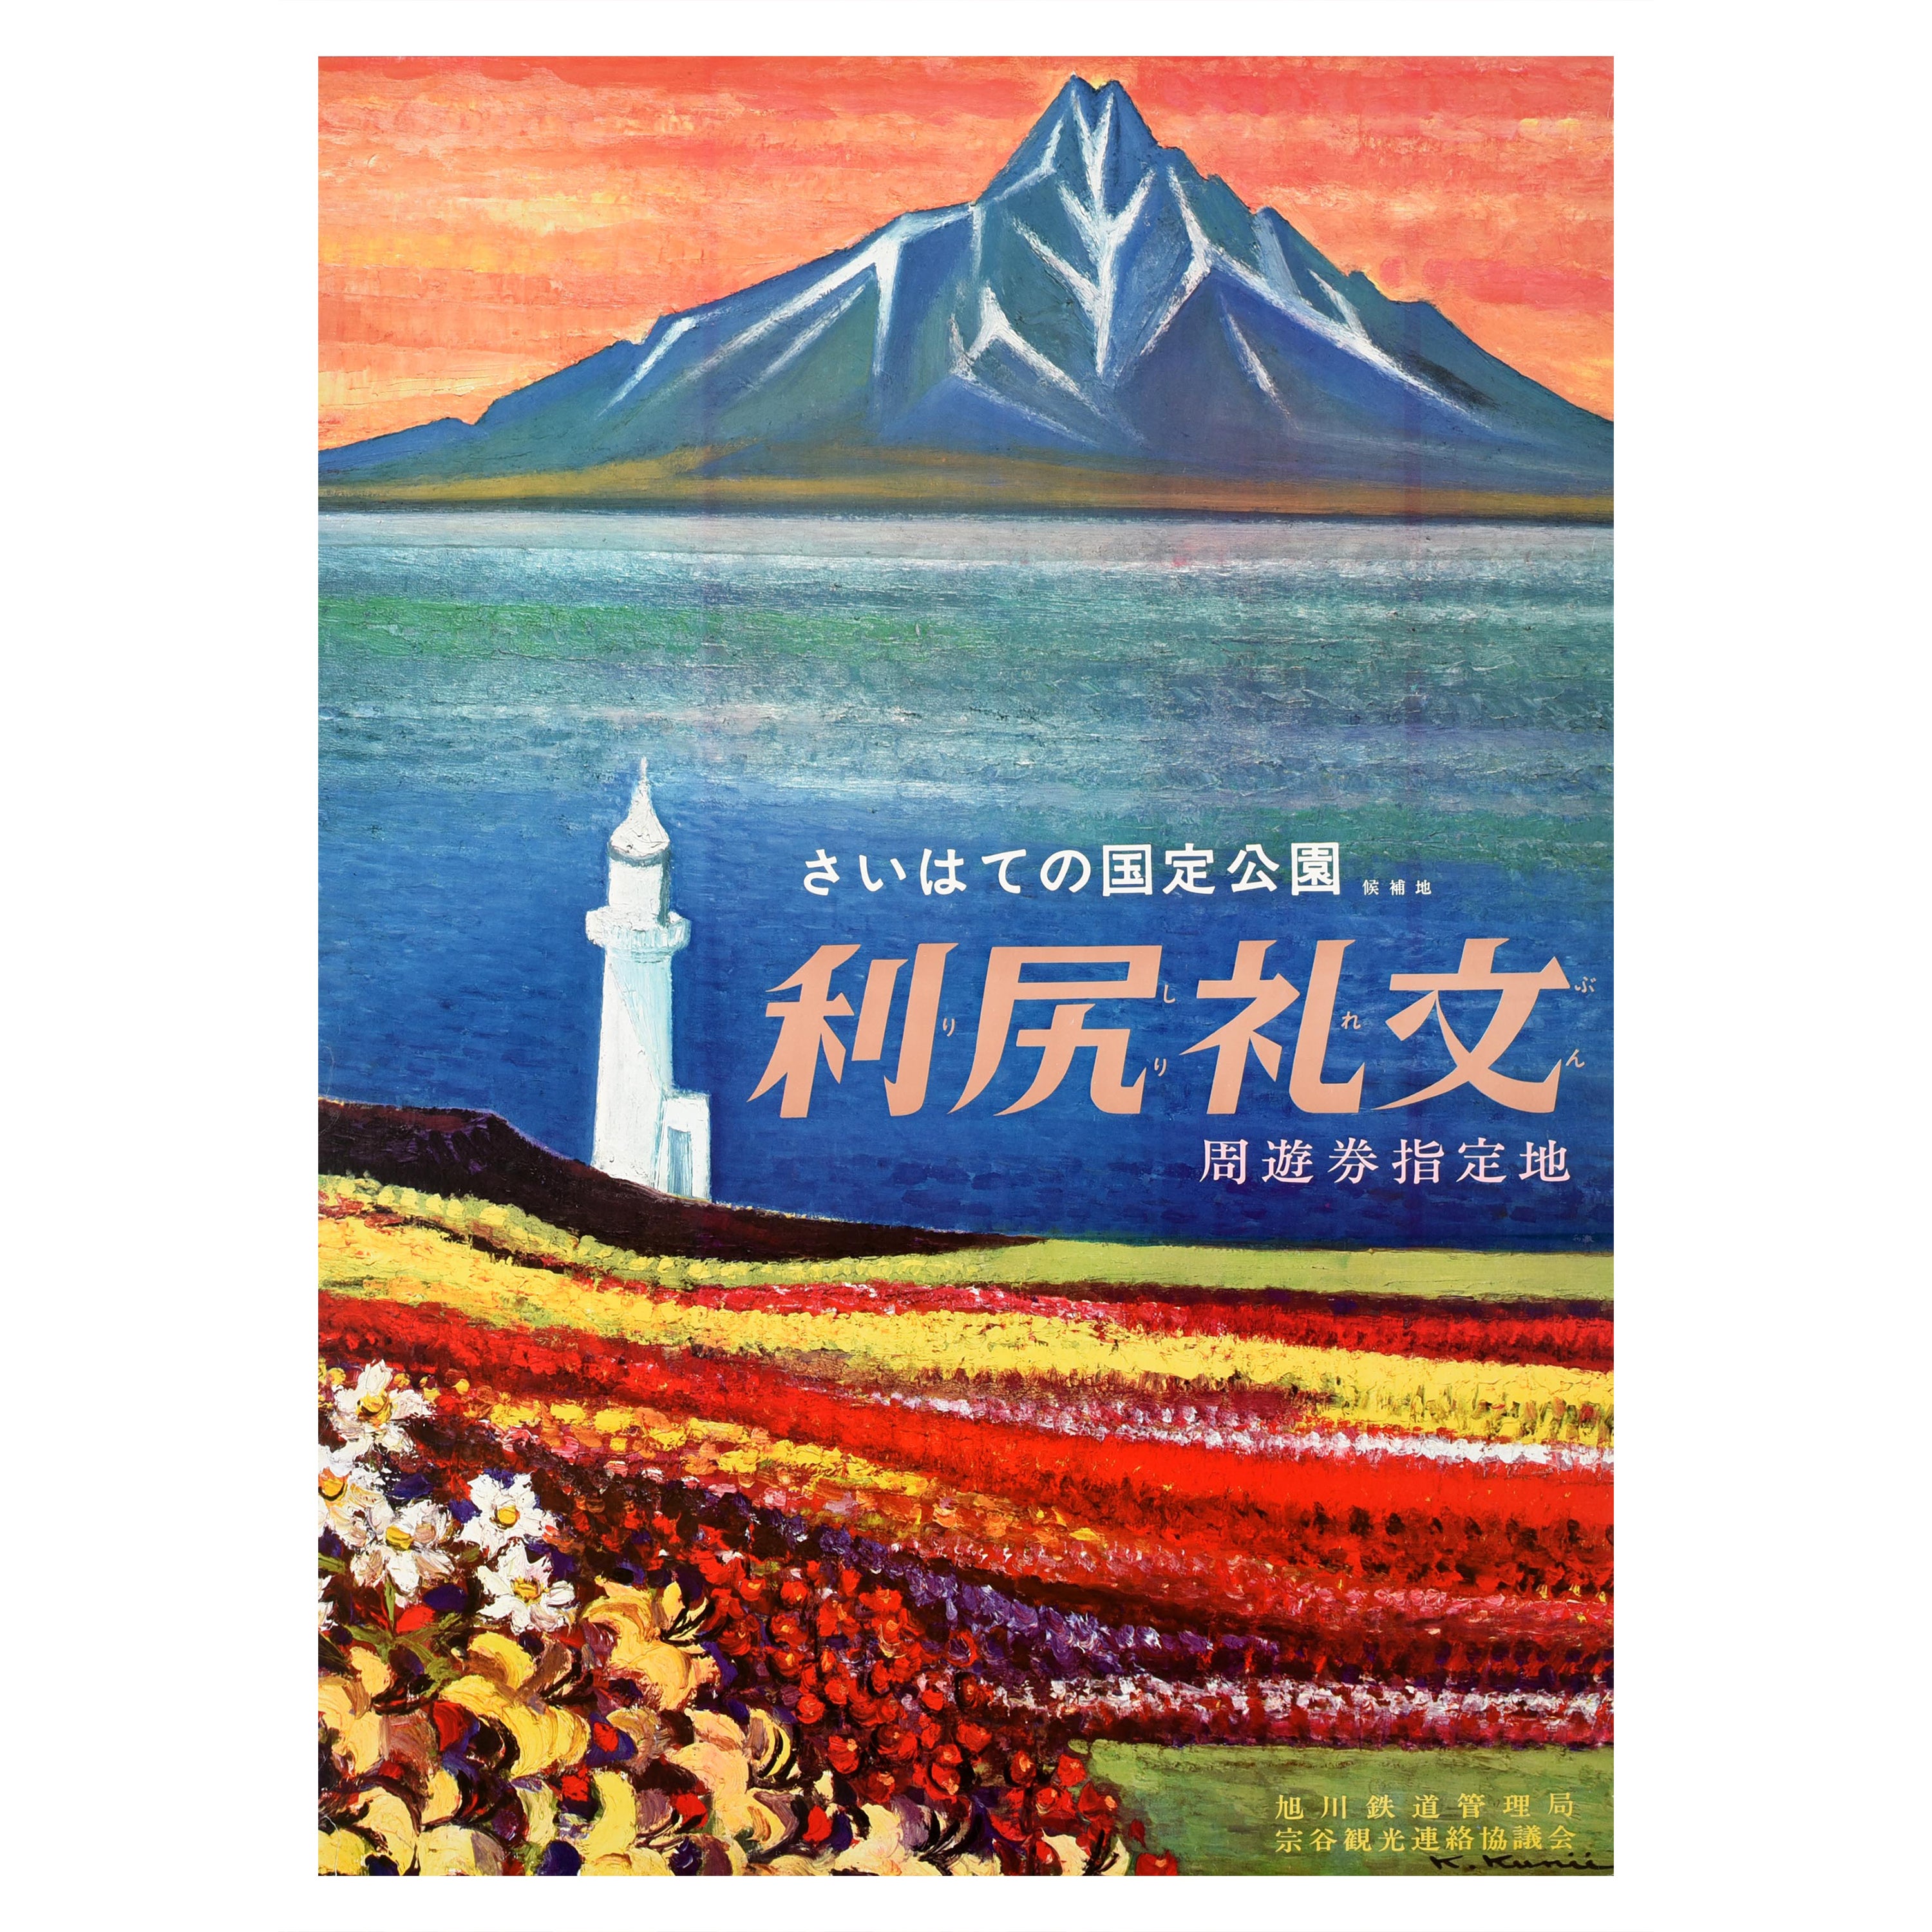 Original Vintage Japan Travel Poster Rishiri Island Hokkaido Coast National Park For Sale